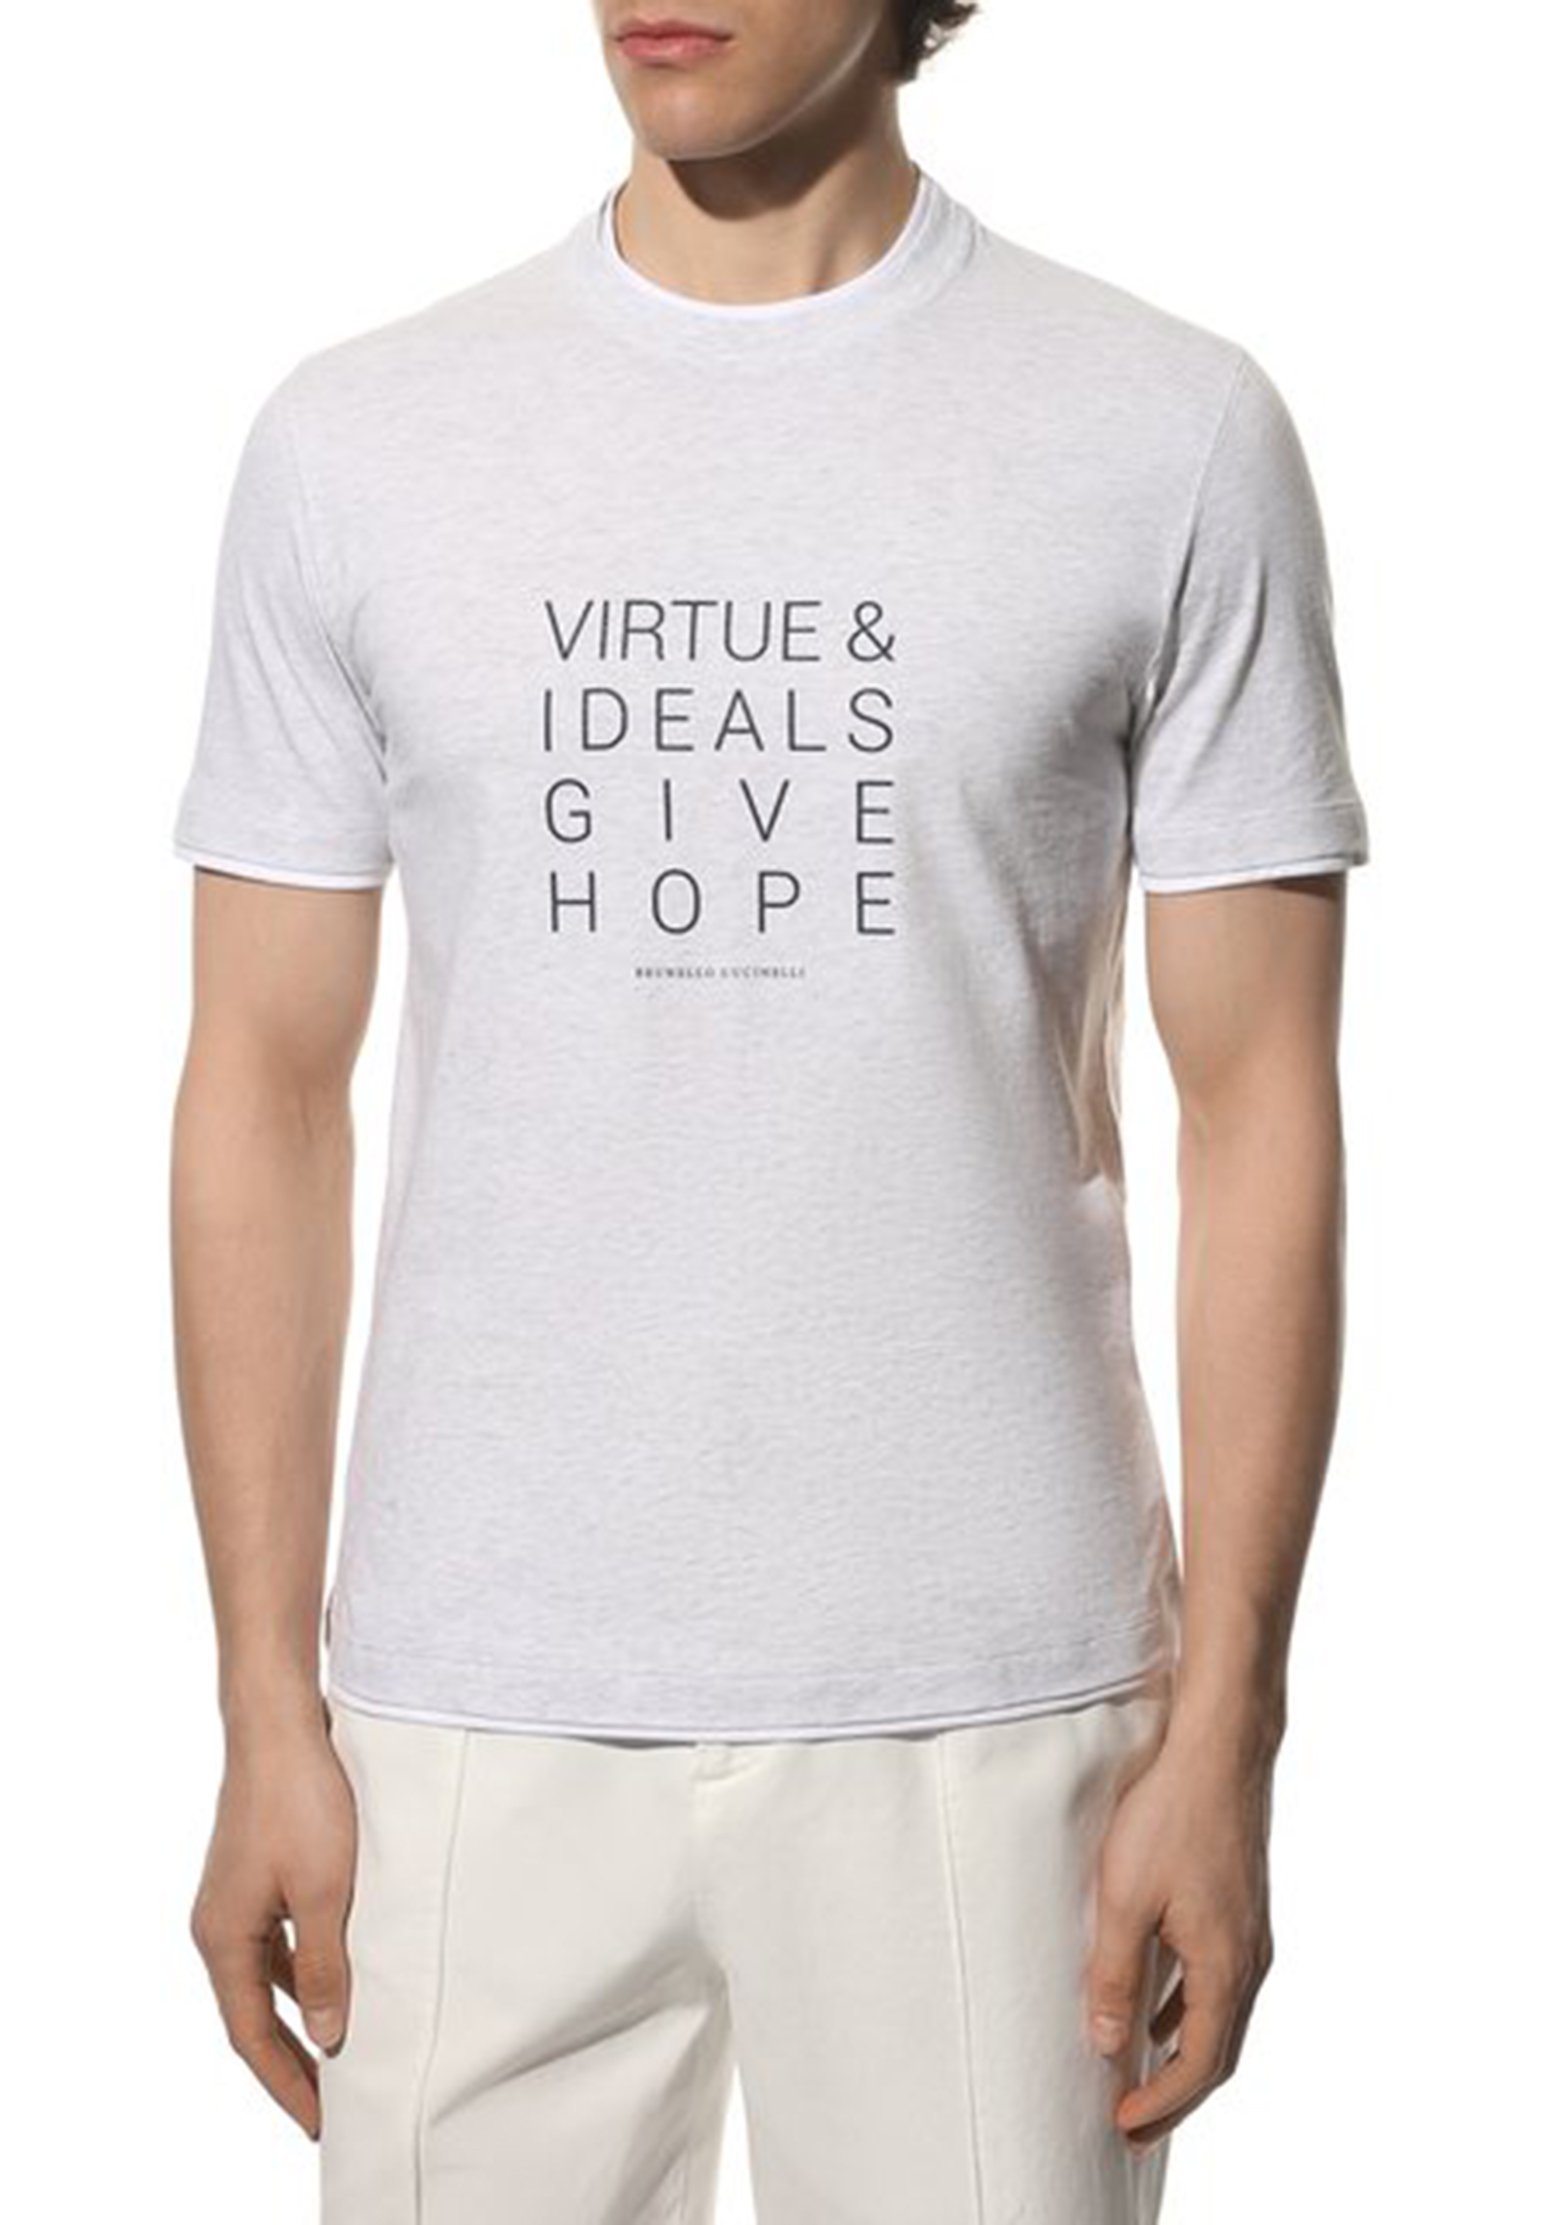 T-Shirt BRUNELLO CUCINELLI Color: light grey (Code: 483) in online store Allure